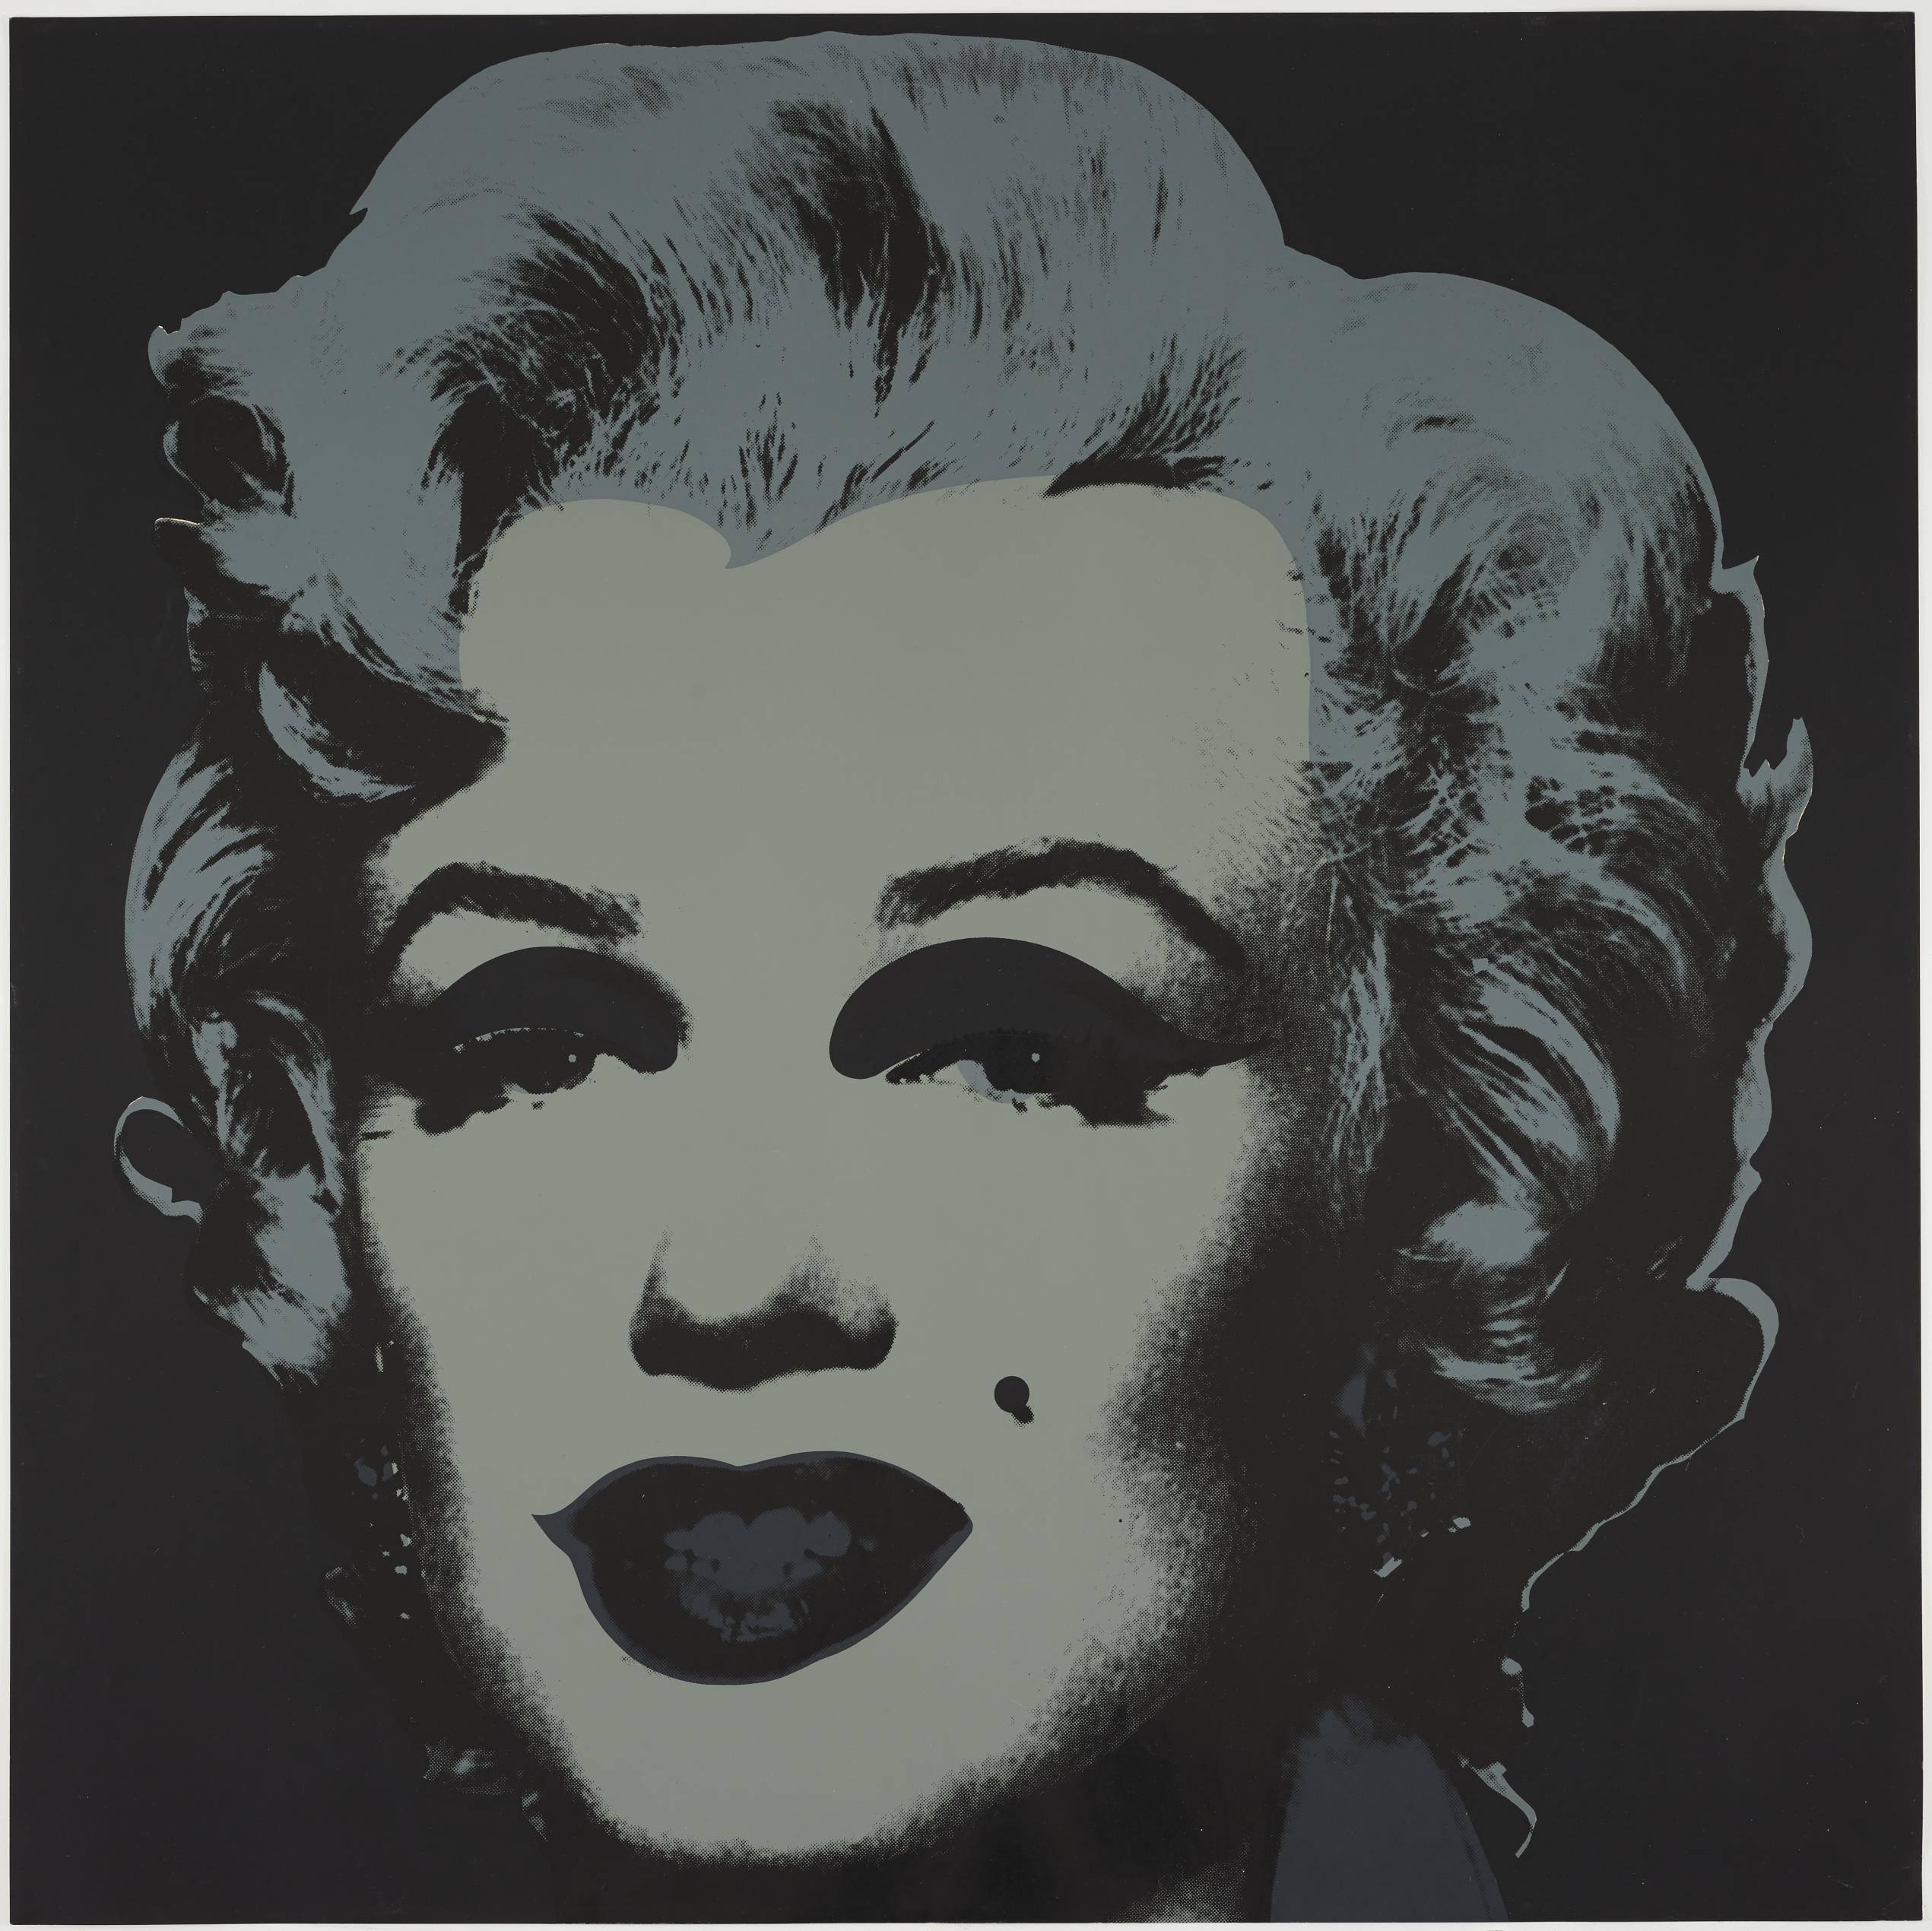 Andy Warhol Portrait Print - Marilyn Monroe (Marilyn) F&S II.24